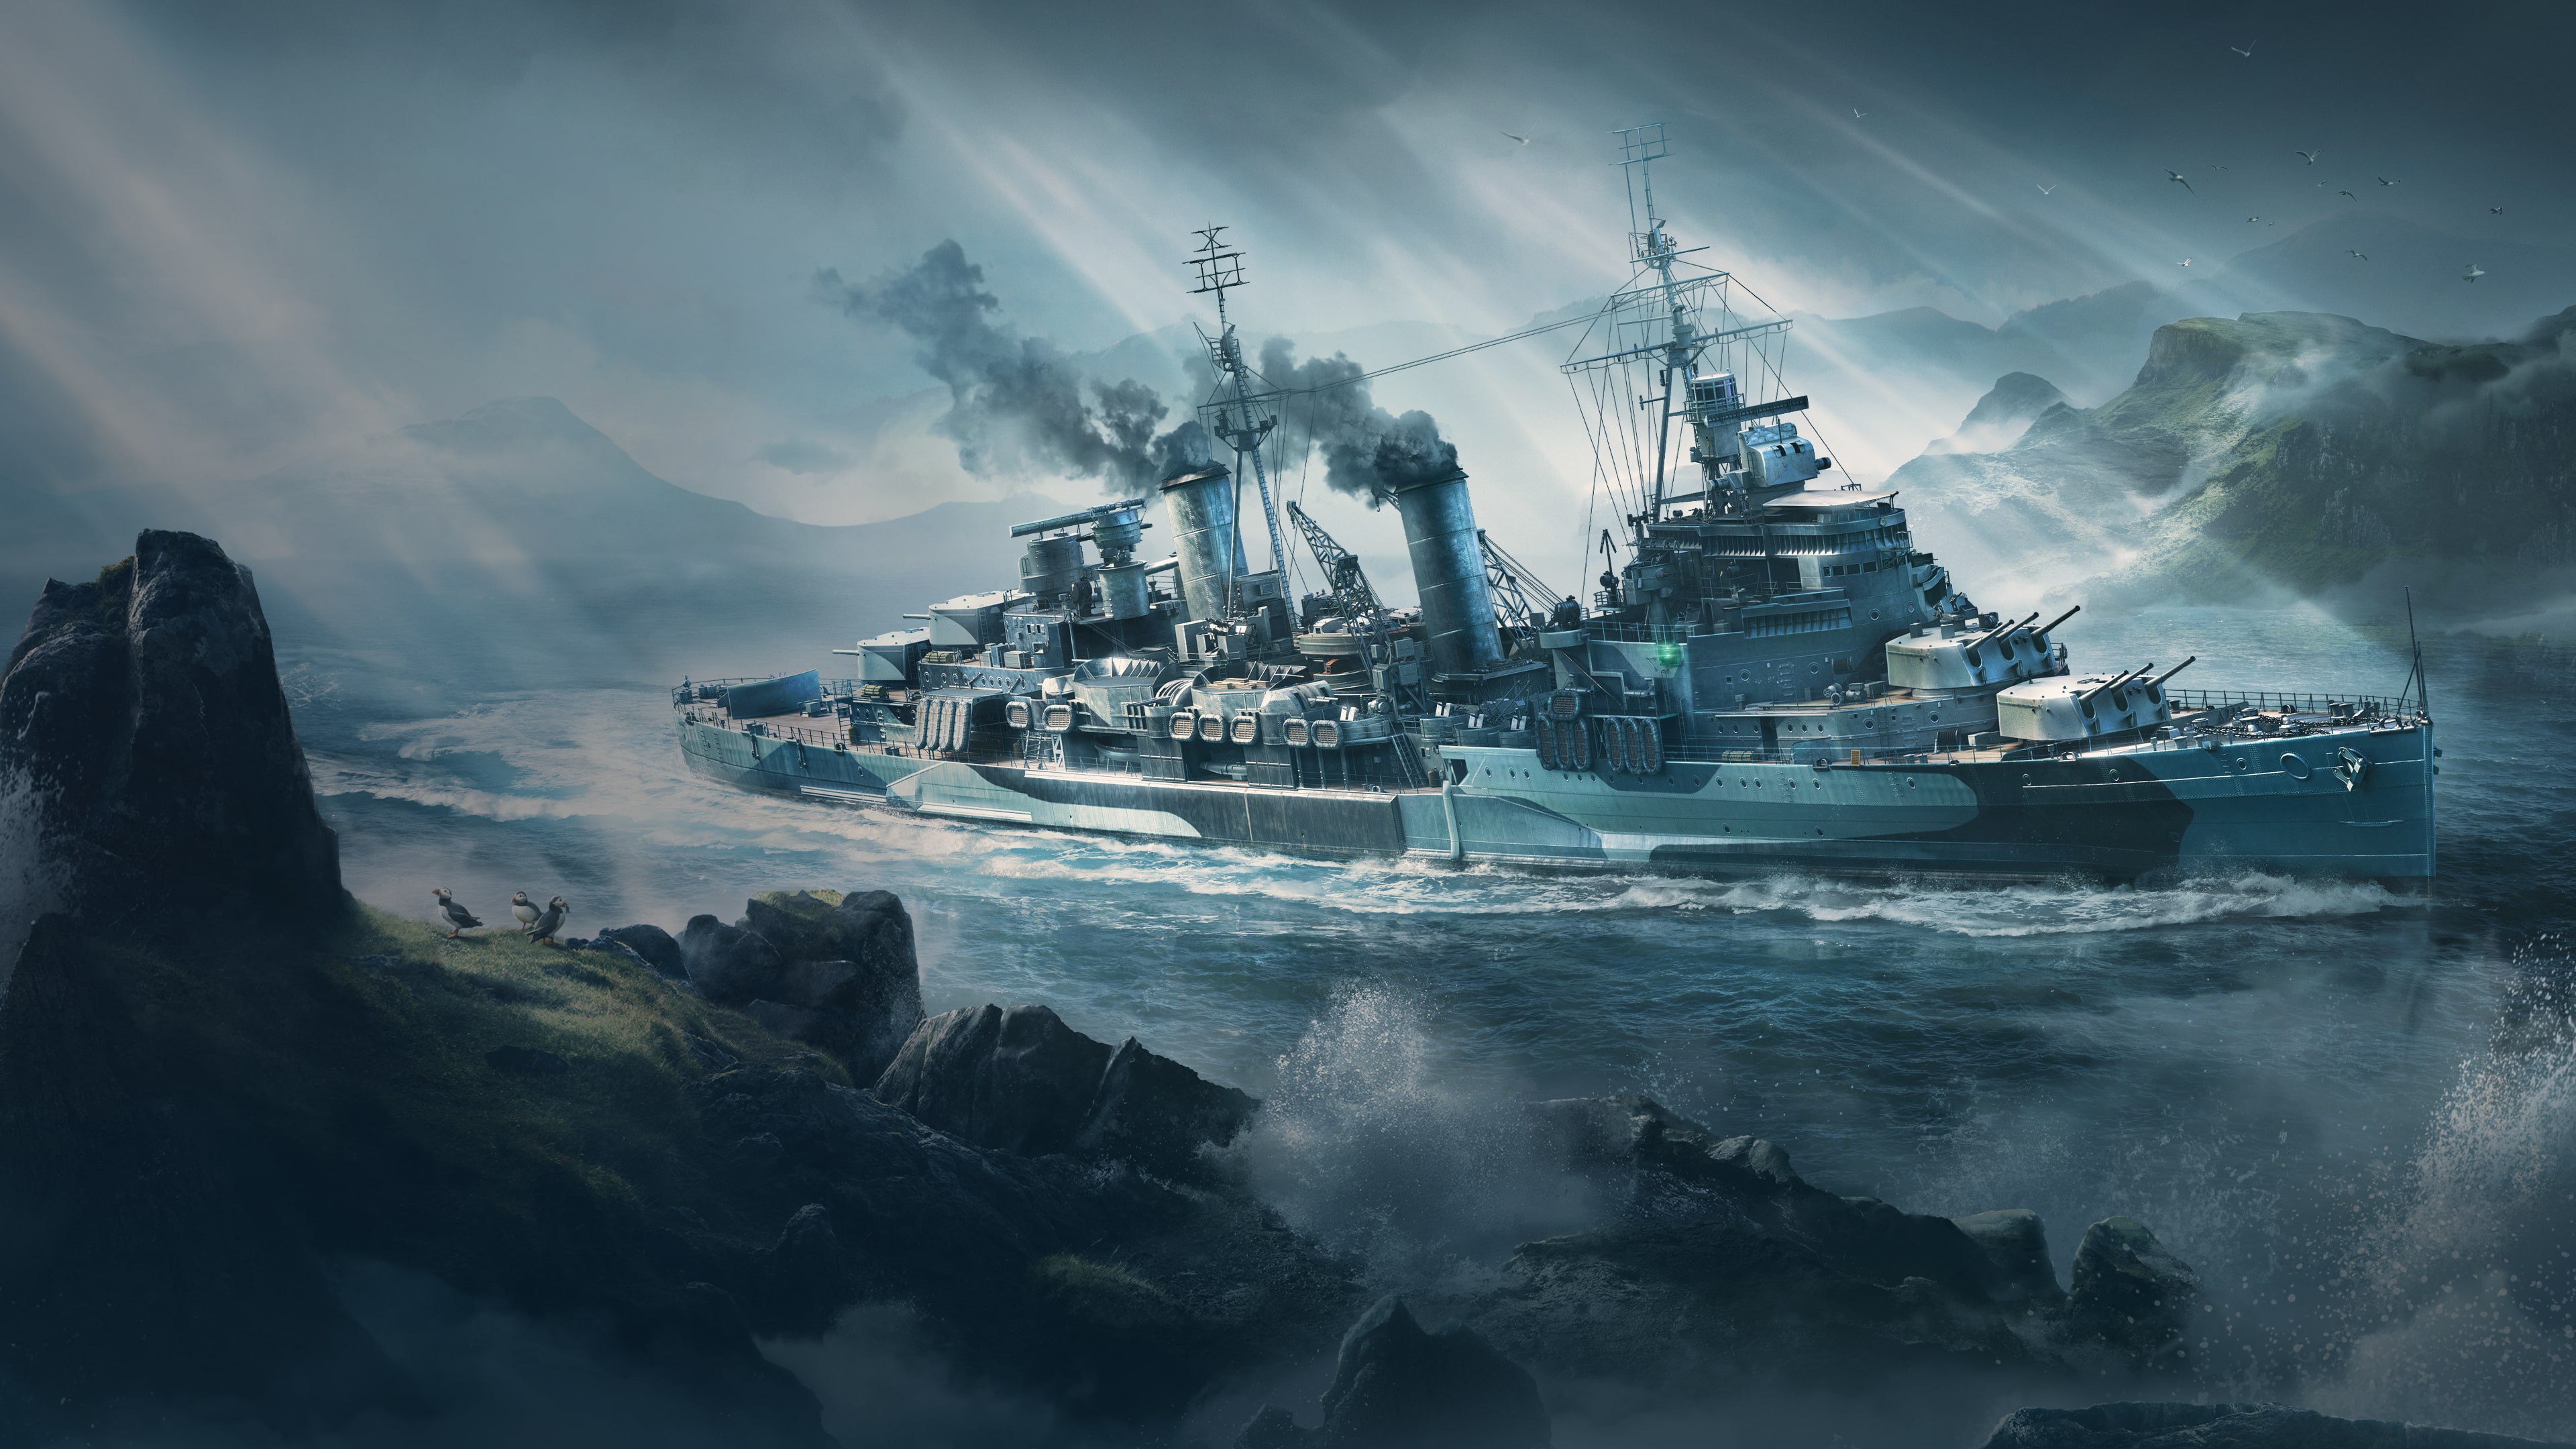 World of Warships:Legends